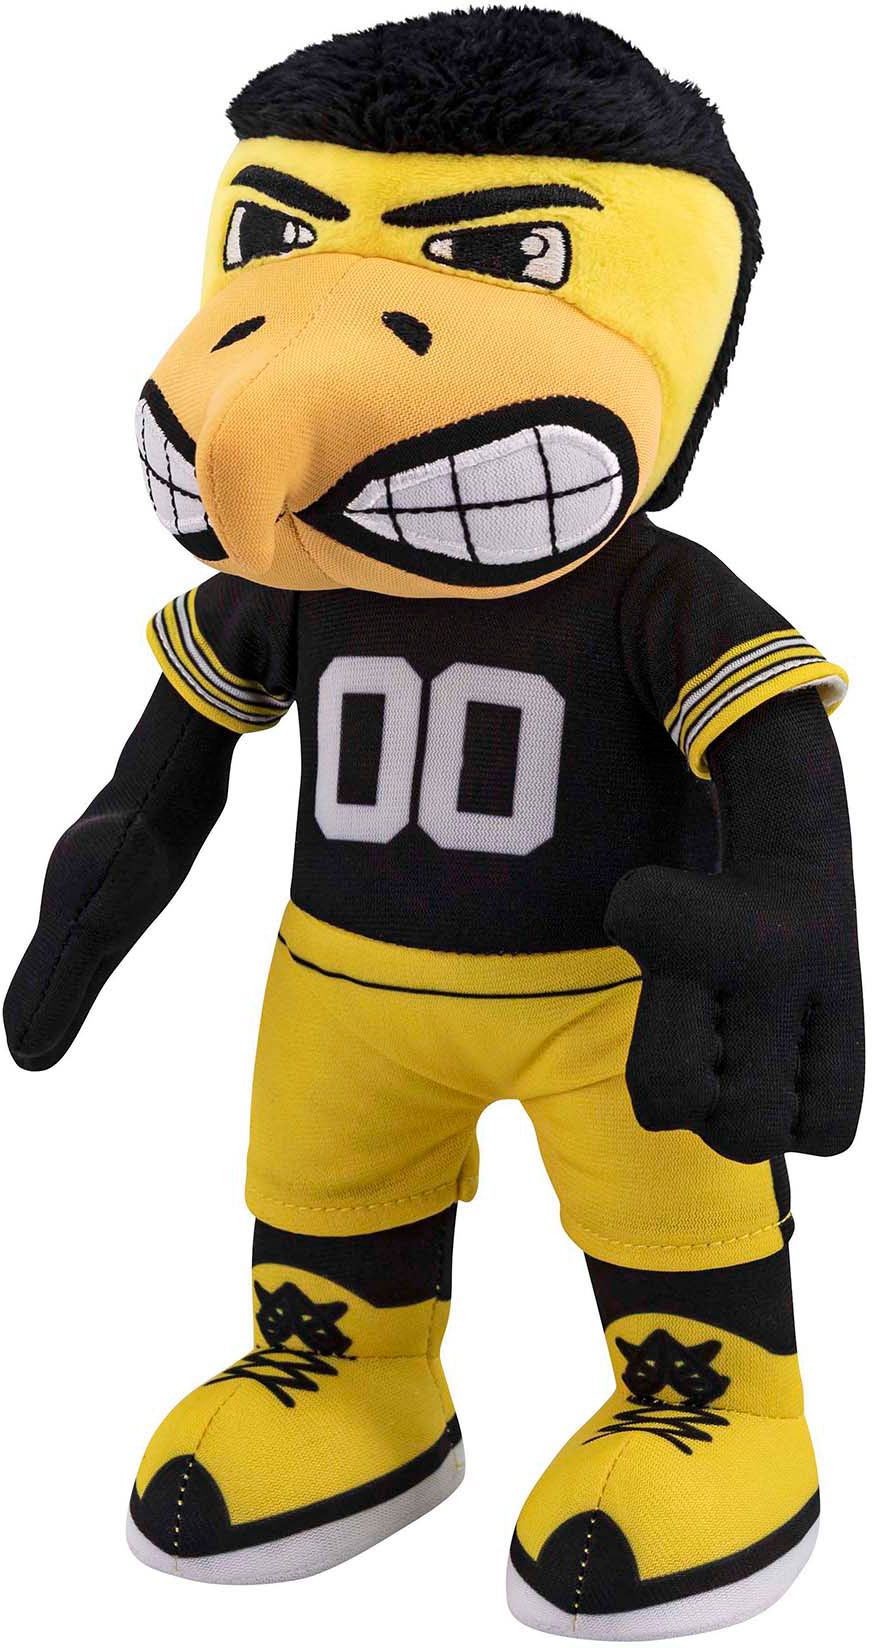 Uncanny Brands Iowa Hawkeyes Mascot Plush